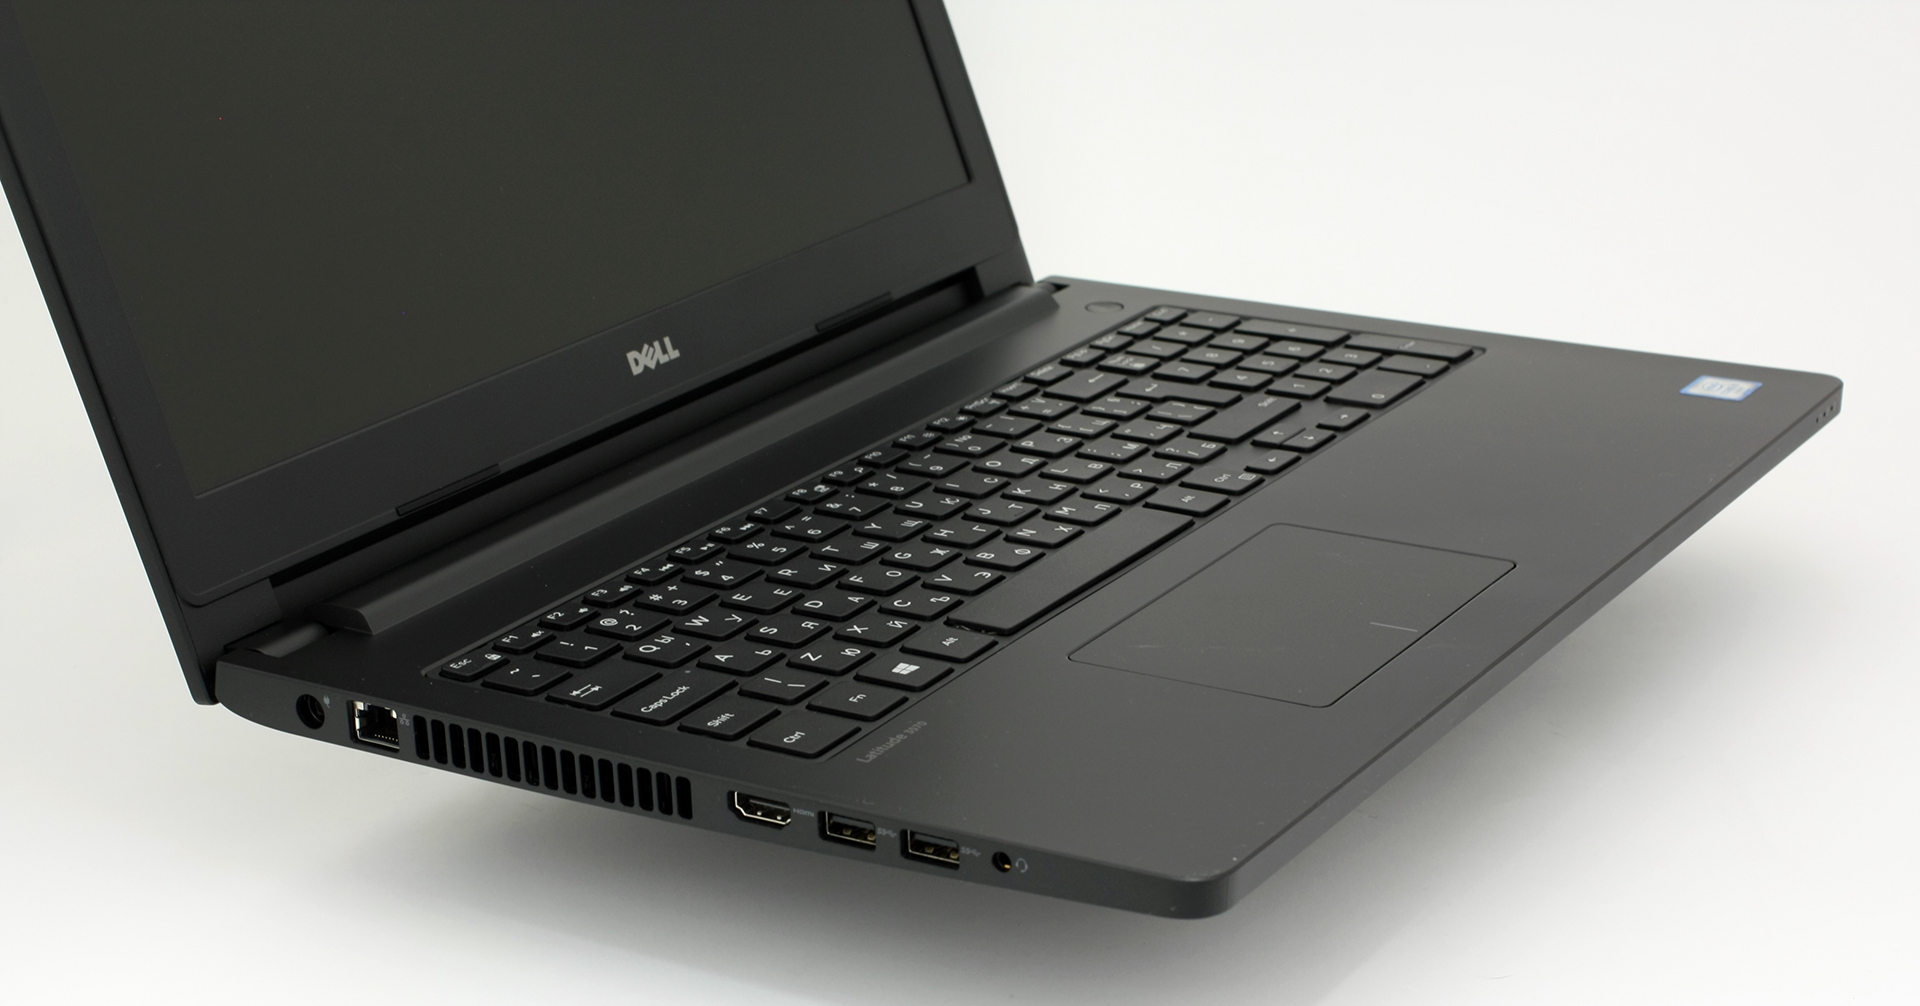 Dell Latitude 3570 - Specs, Tests, and Prices | LaptopMedia.com